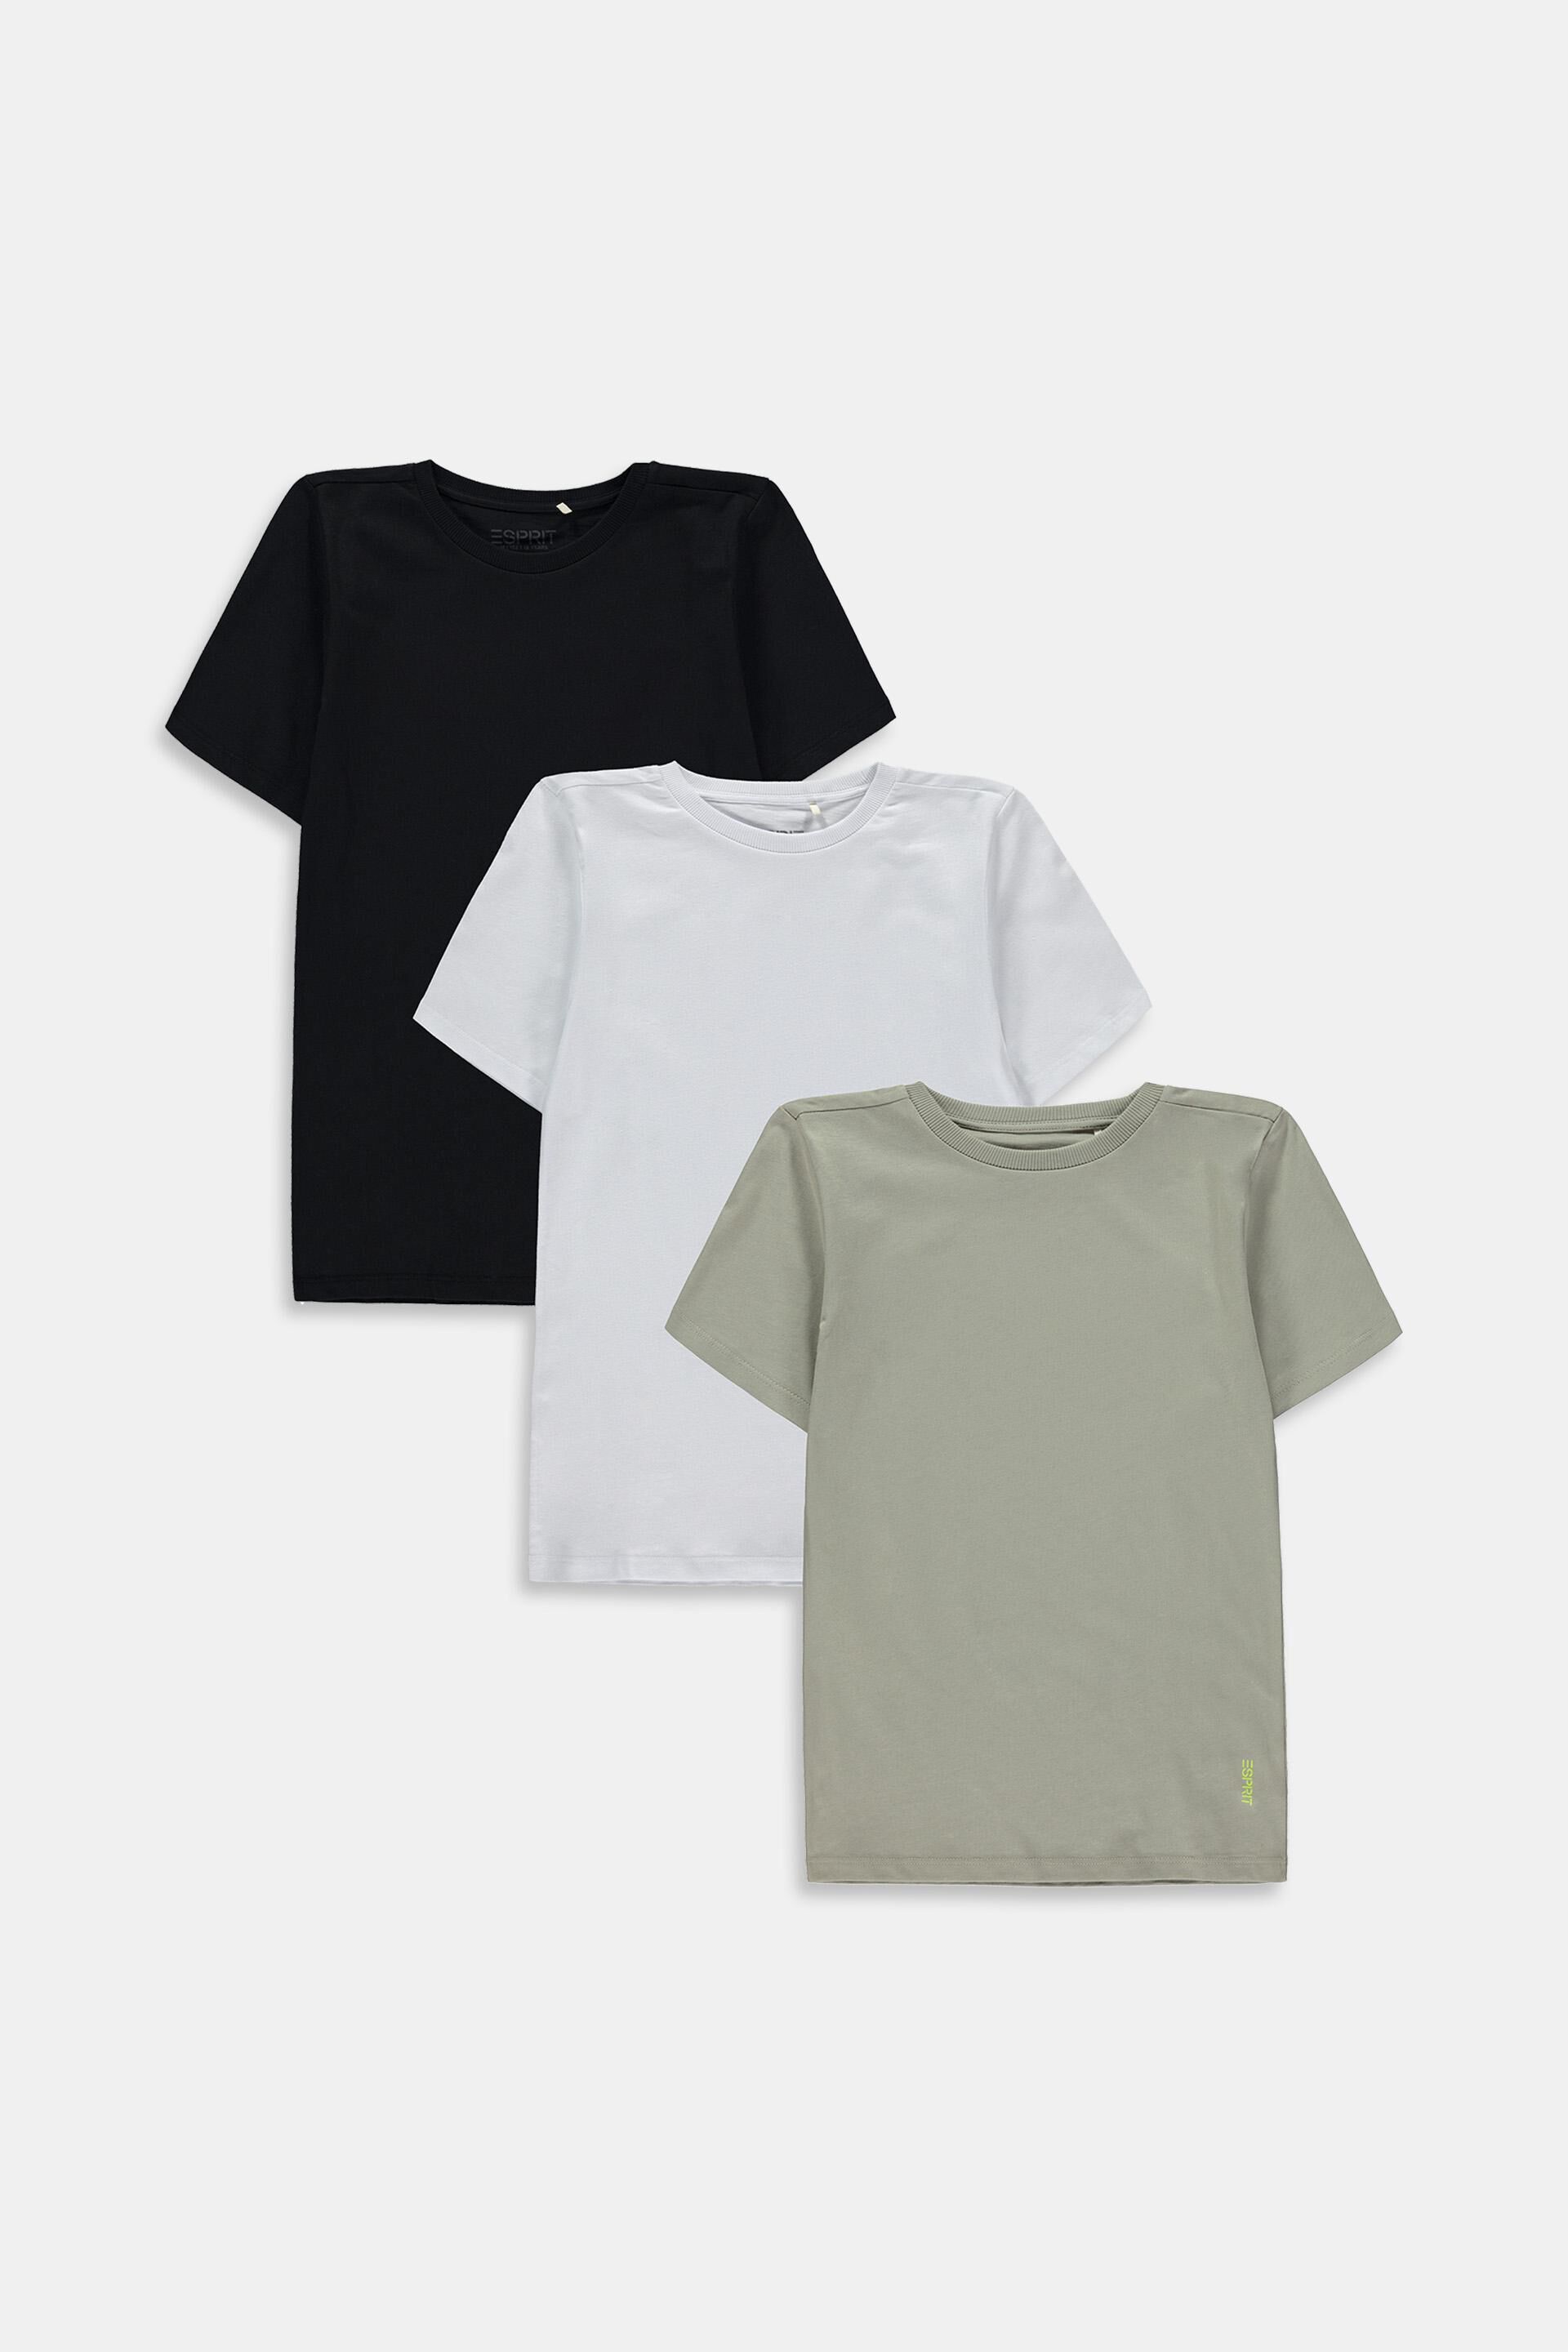 Esprit 3-pack pure t-shirts of cotton